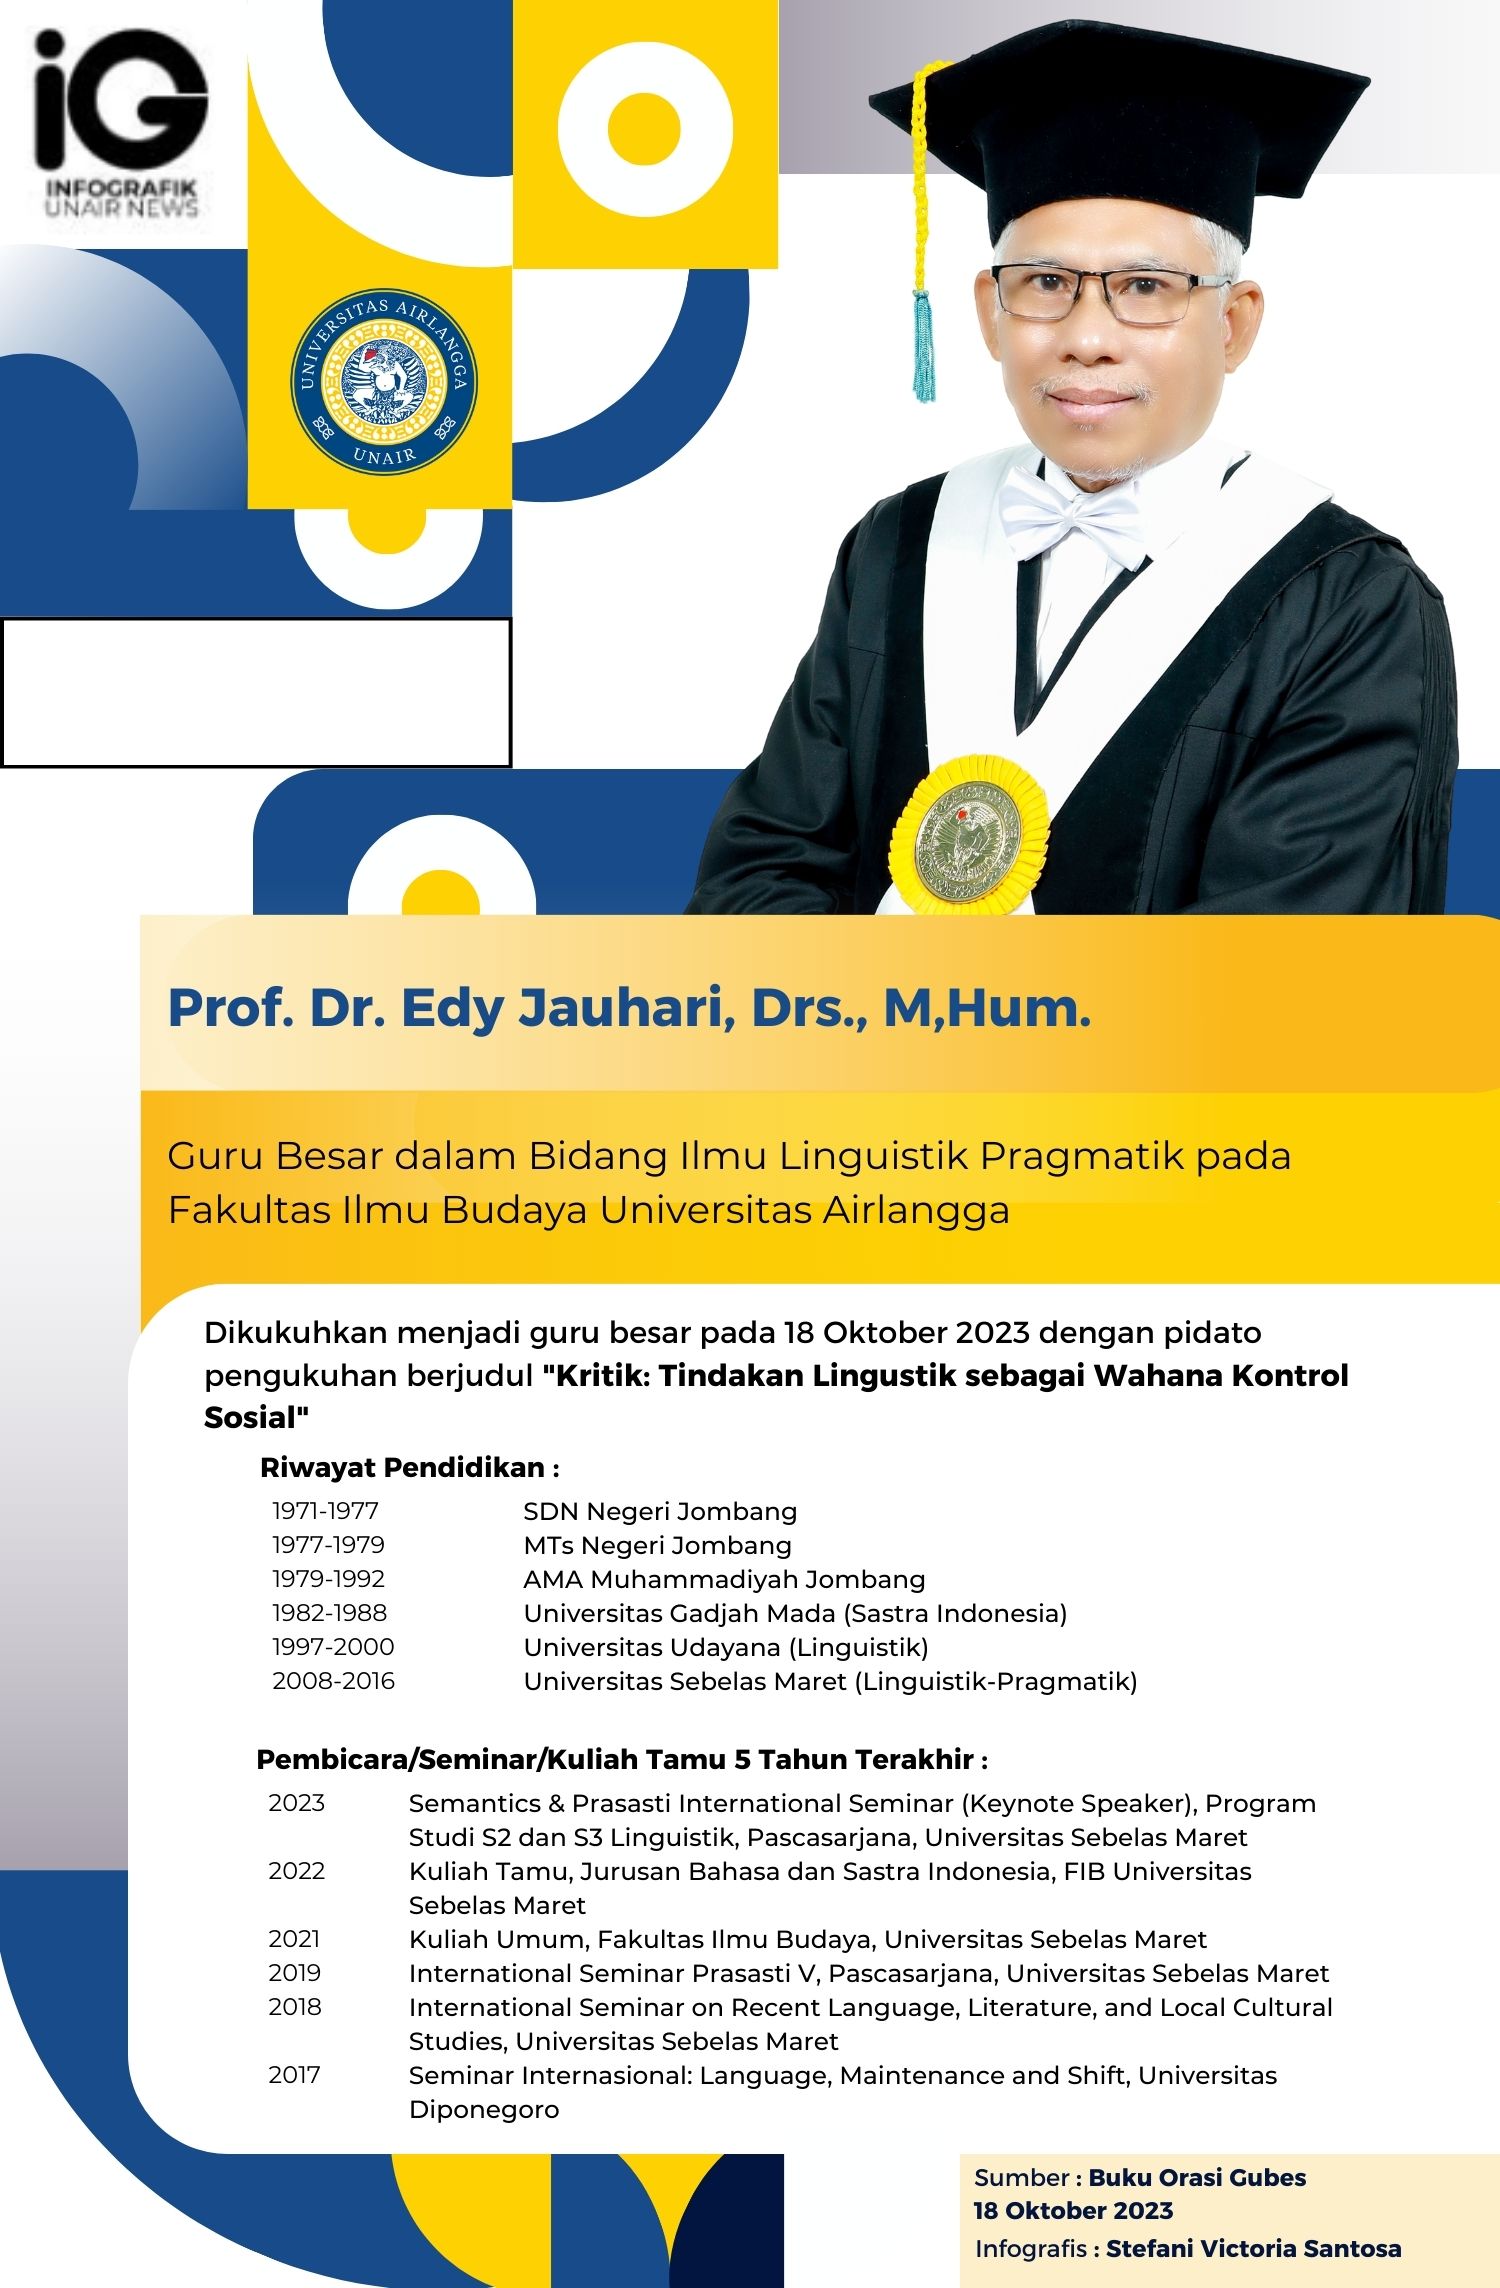 Infografik: Profil Guru Besar Prof. Dr. Edy Jauhari, Drs., M,Hum.